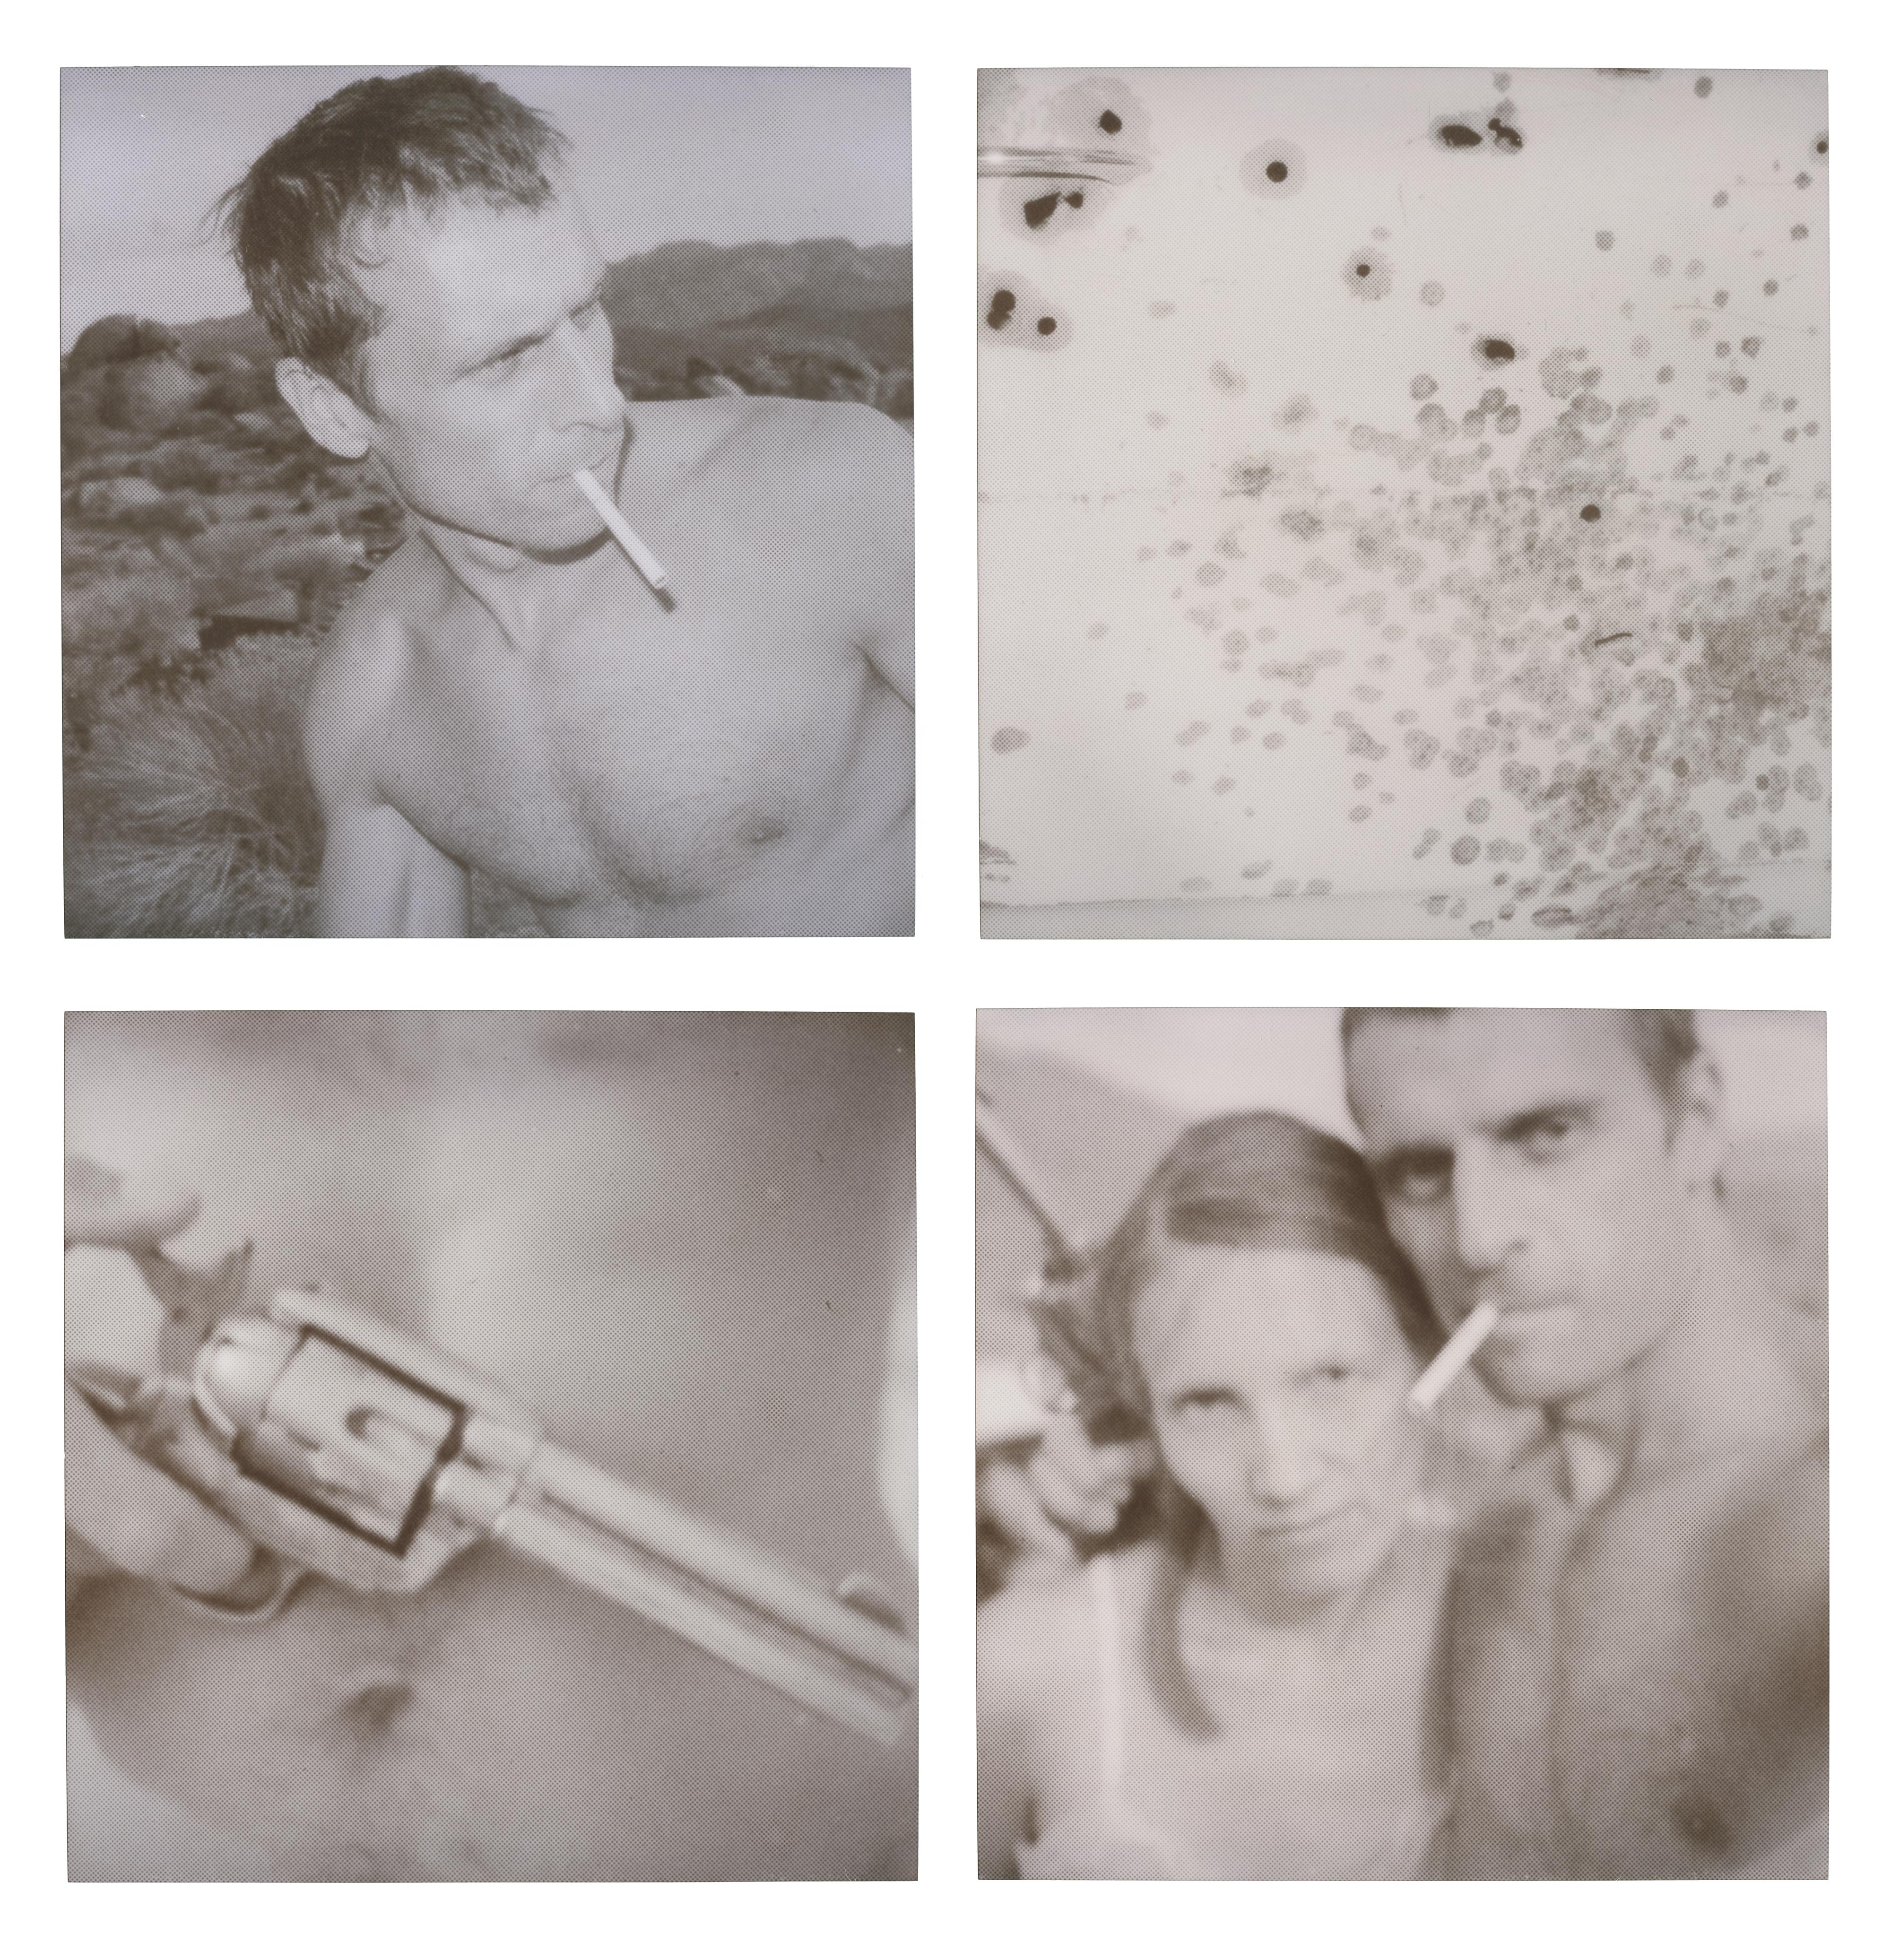 Black and White Photograph Stefanie Schneider - Snap-15 Minutes of Fame (Wastelands) - analogique, non monté, Polaroïd